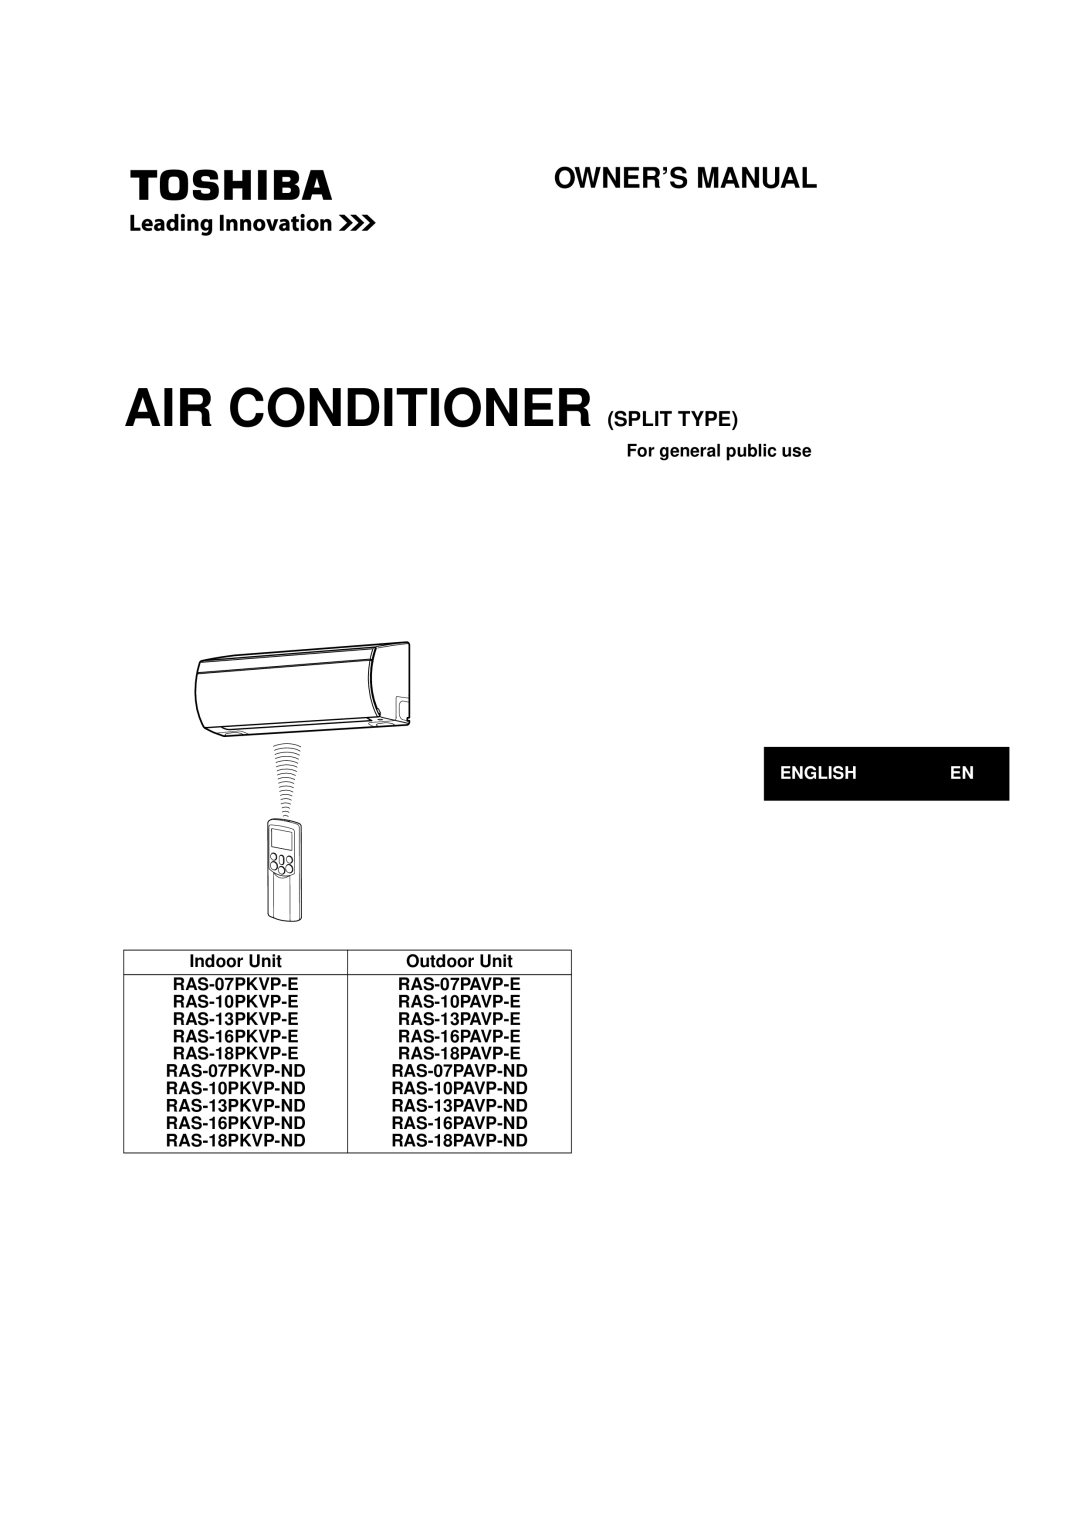 Toshiba RAS-07PKVP-E owner manual Air Conditioner Split Type, For general public use, English En, Indoor Unit 